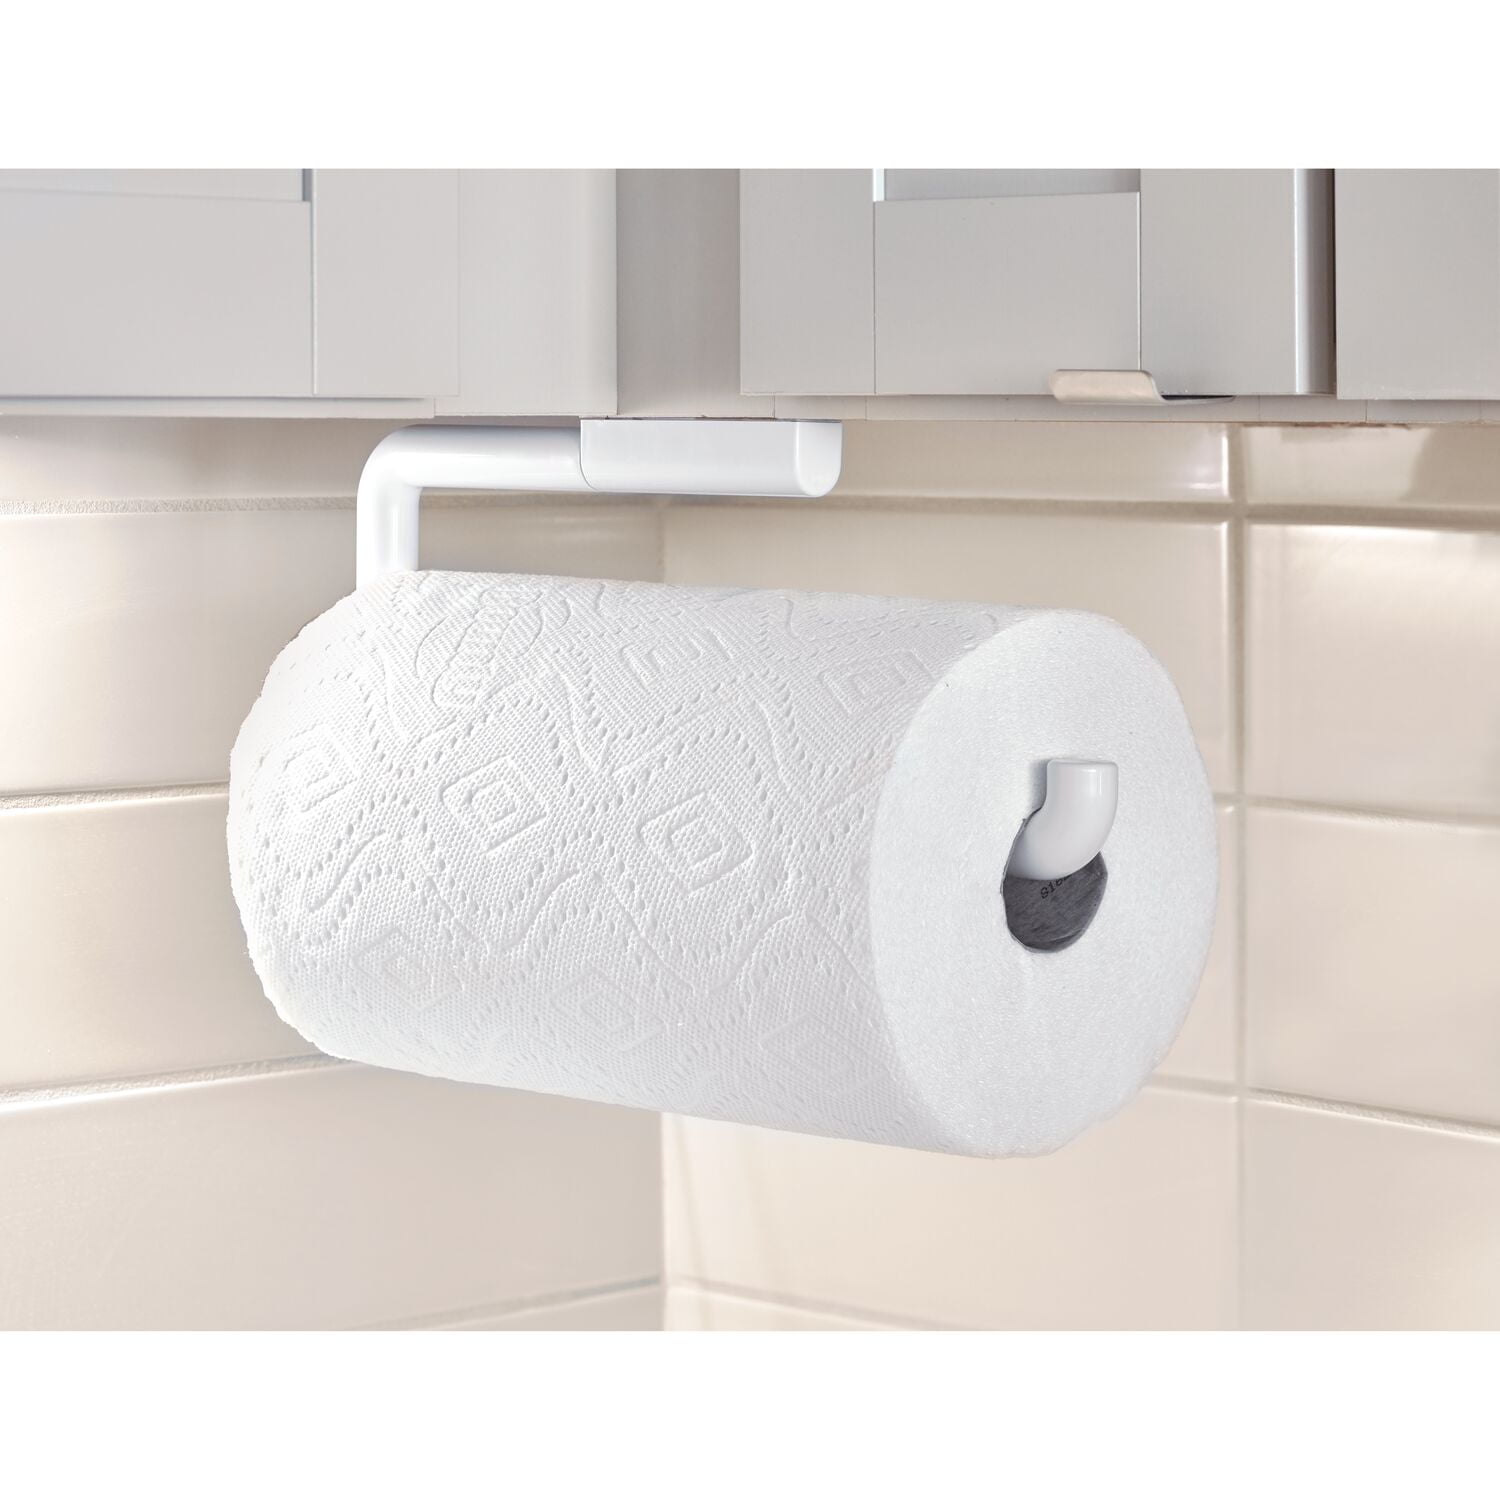 Celine Wall Mounted Paper Towel Holder Rack